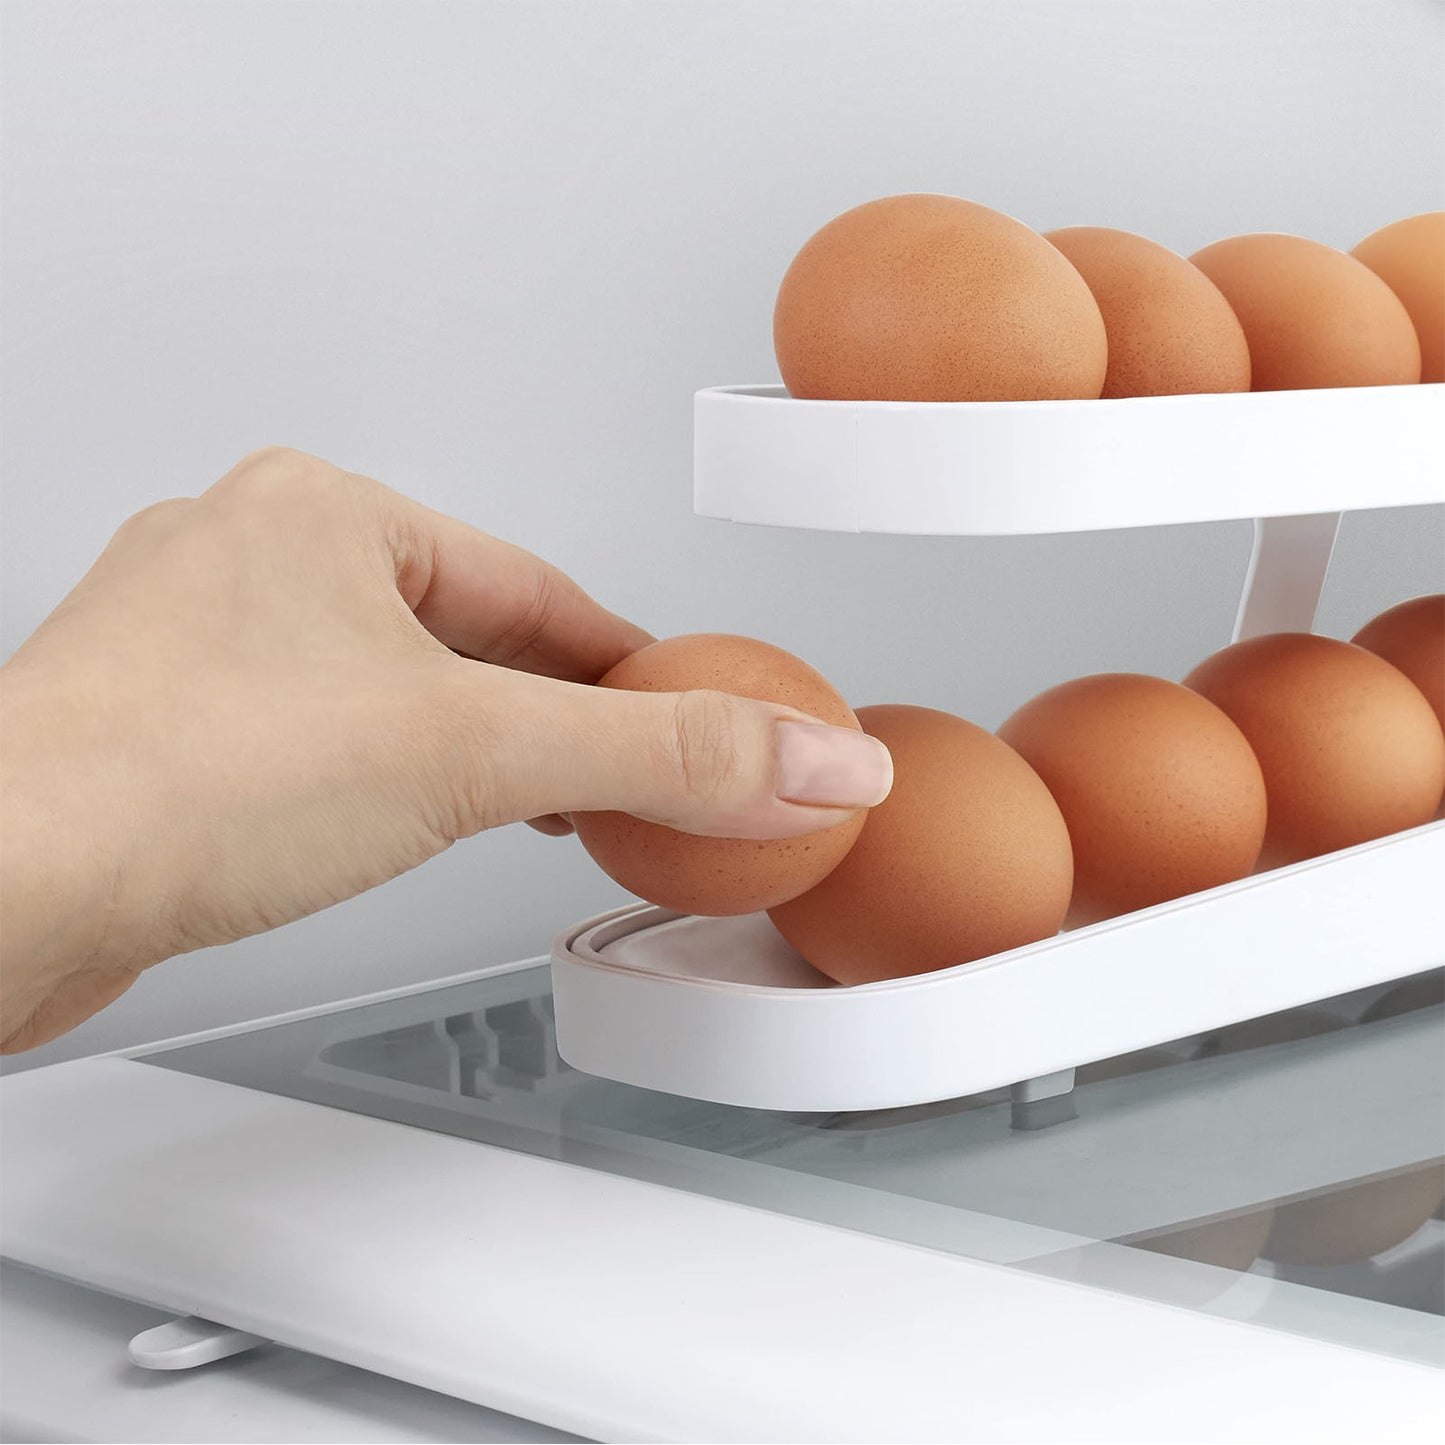 Rolldown Egg Rack Refrigerator Organizer